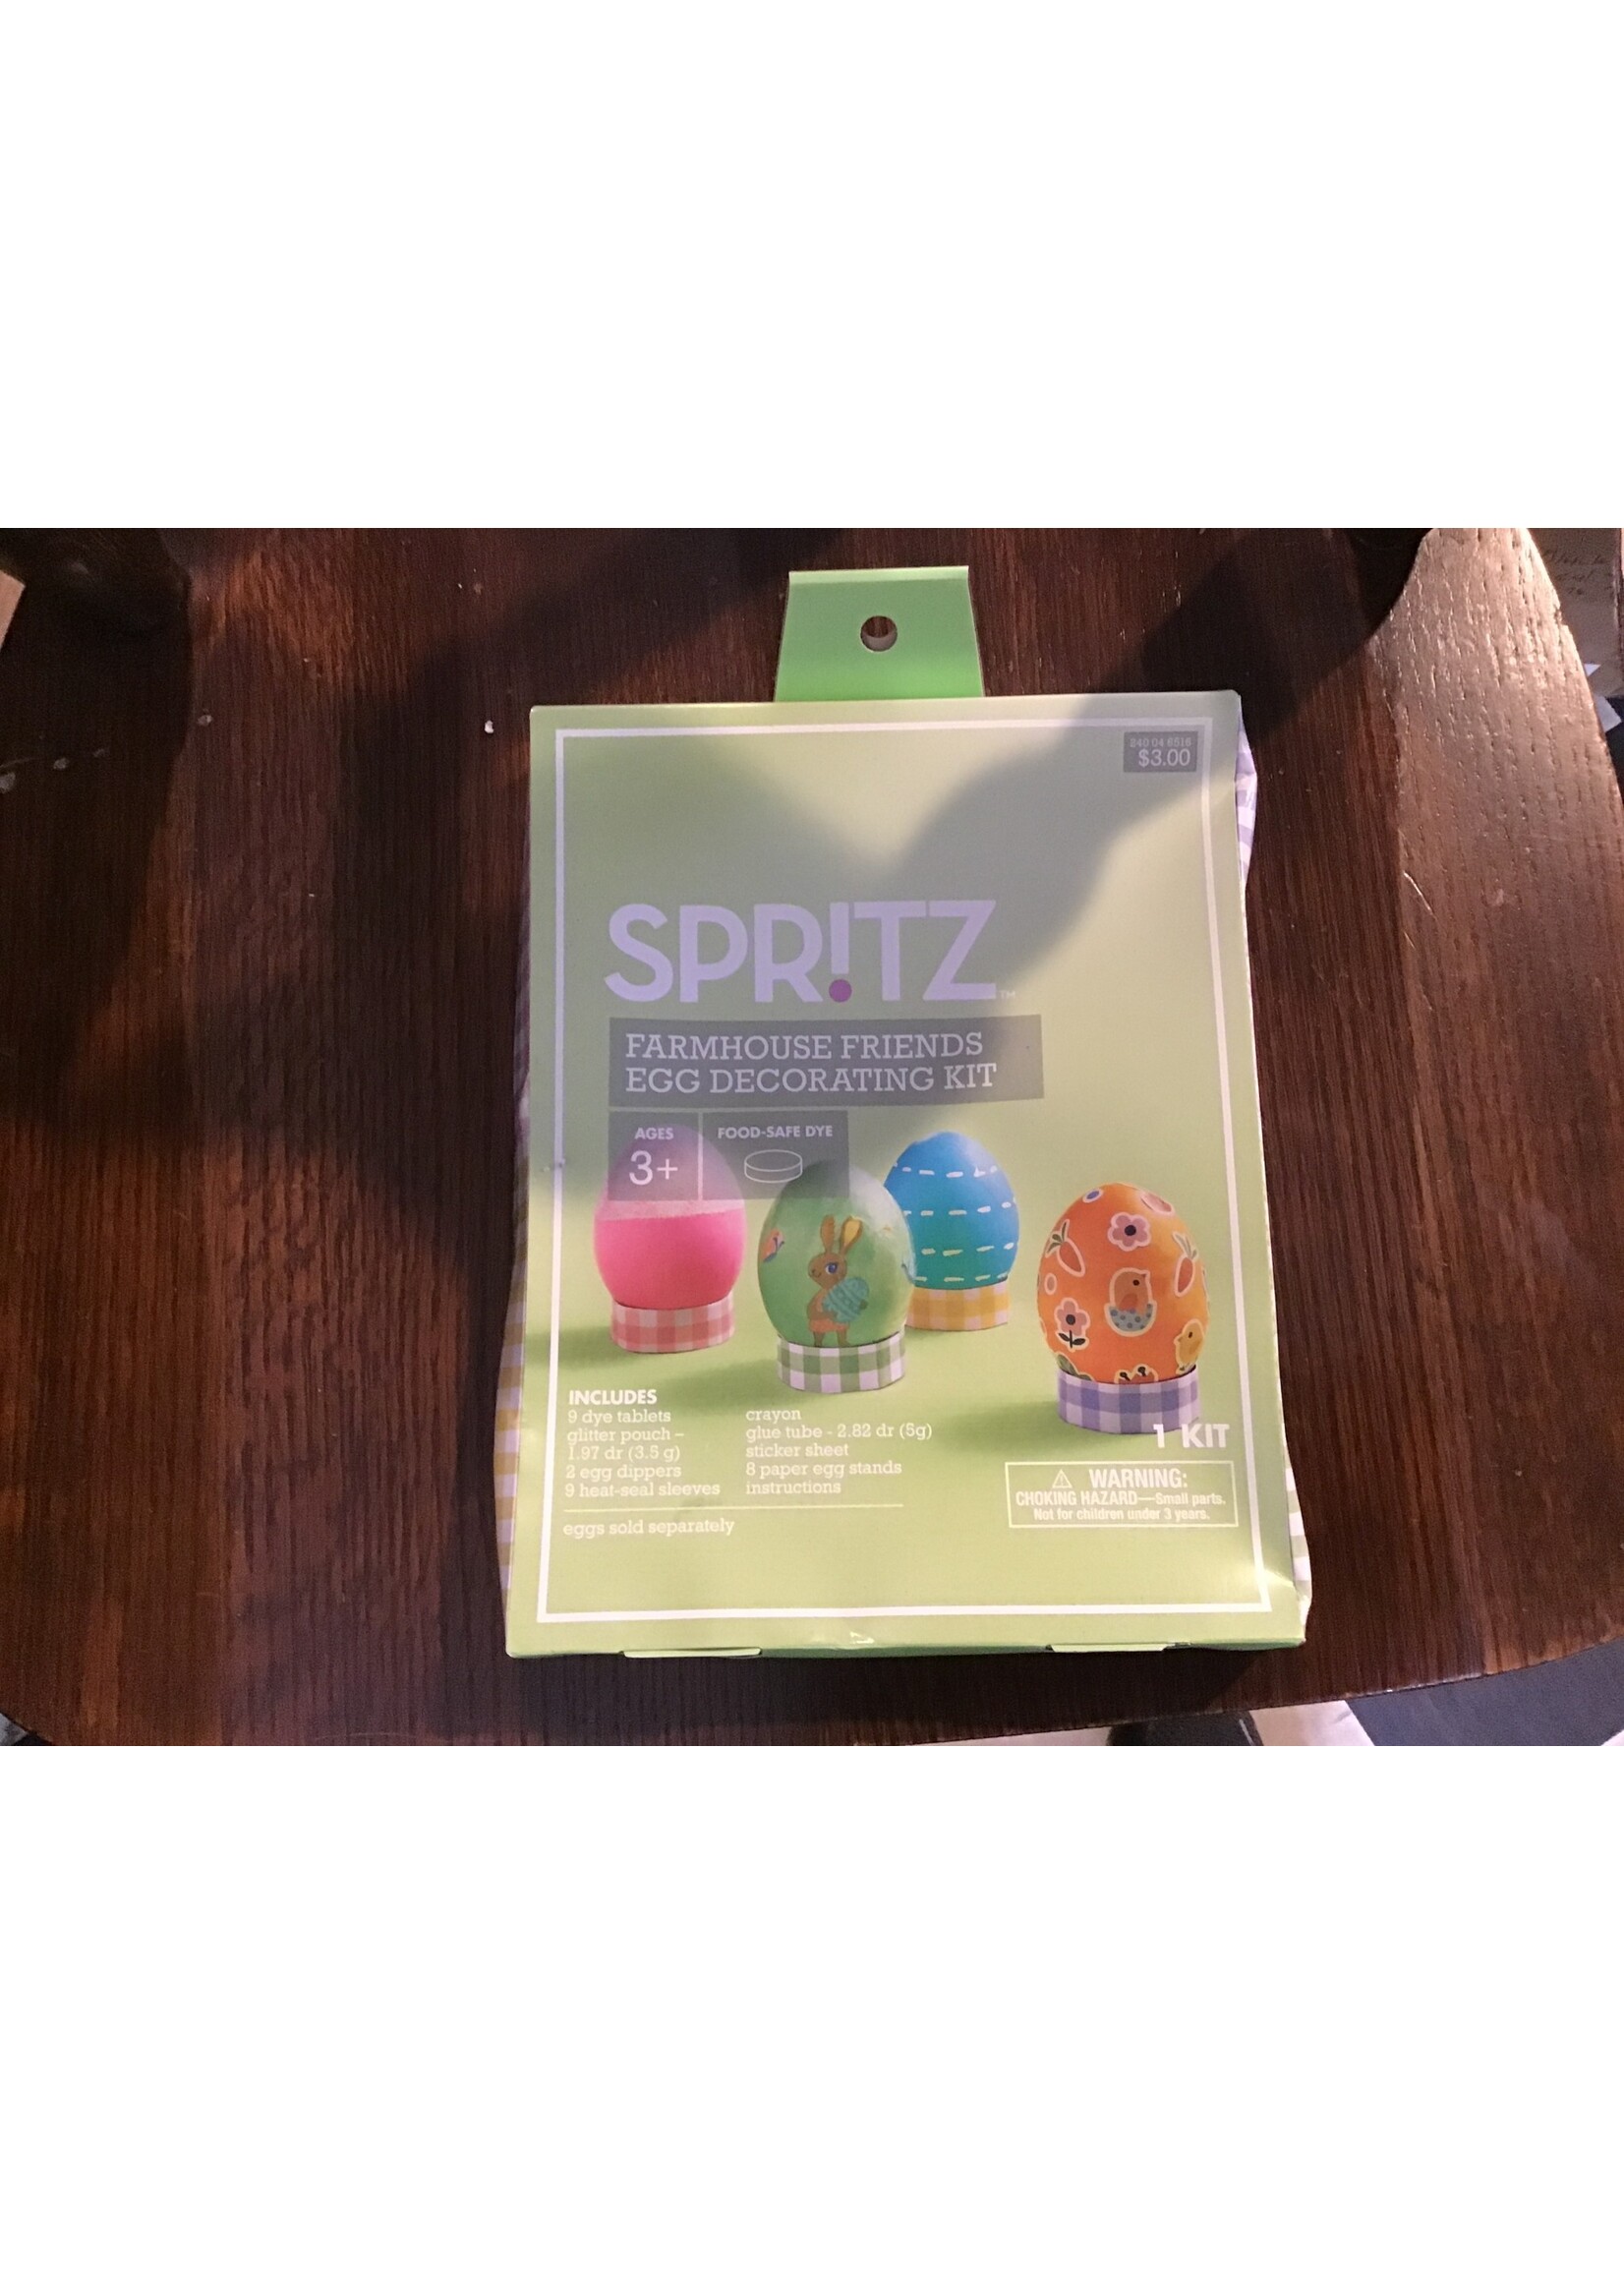 *box damage* Spritz farmhouse friends egg decorating kit